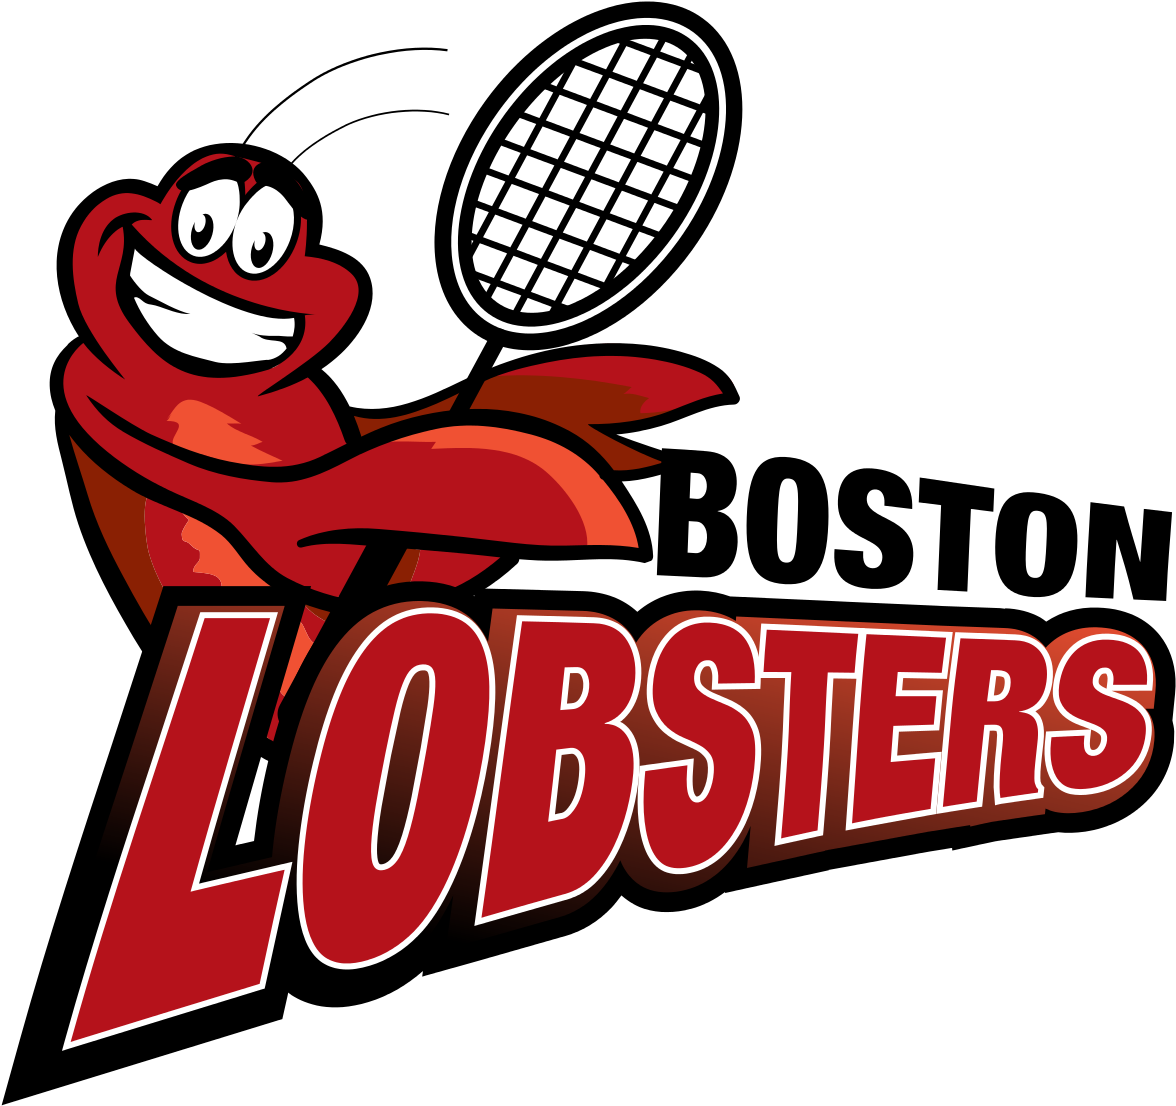 Boston Lobsters Tennis Team (1200x1132)